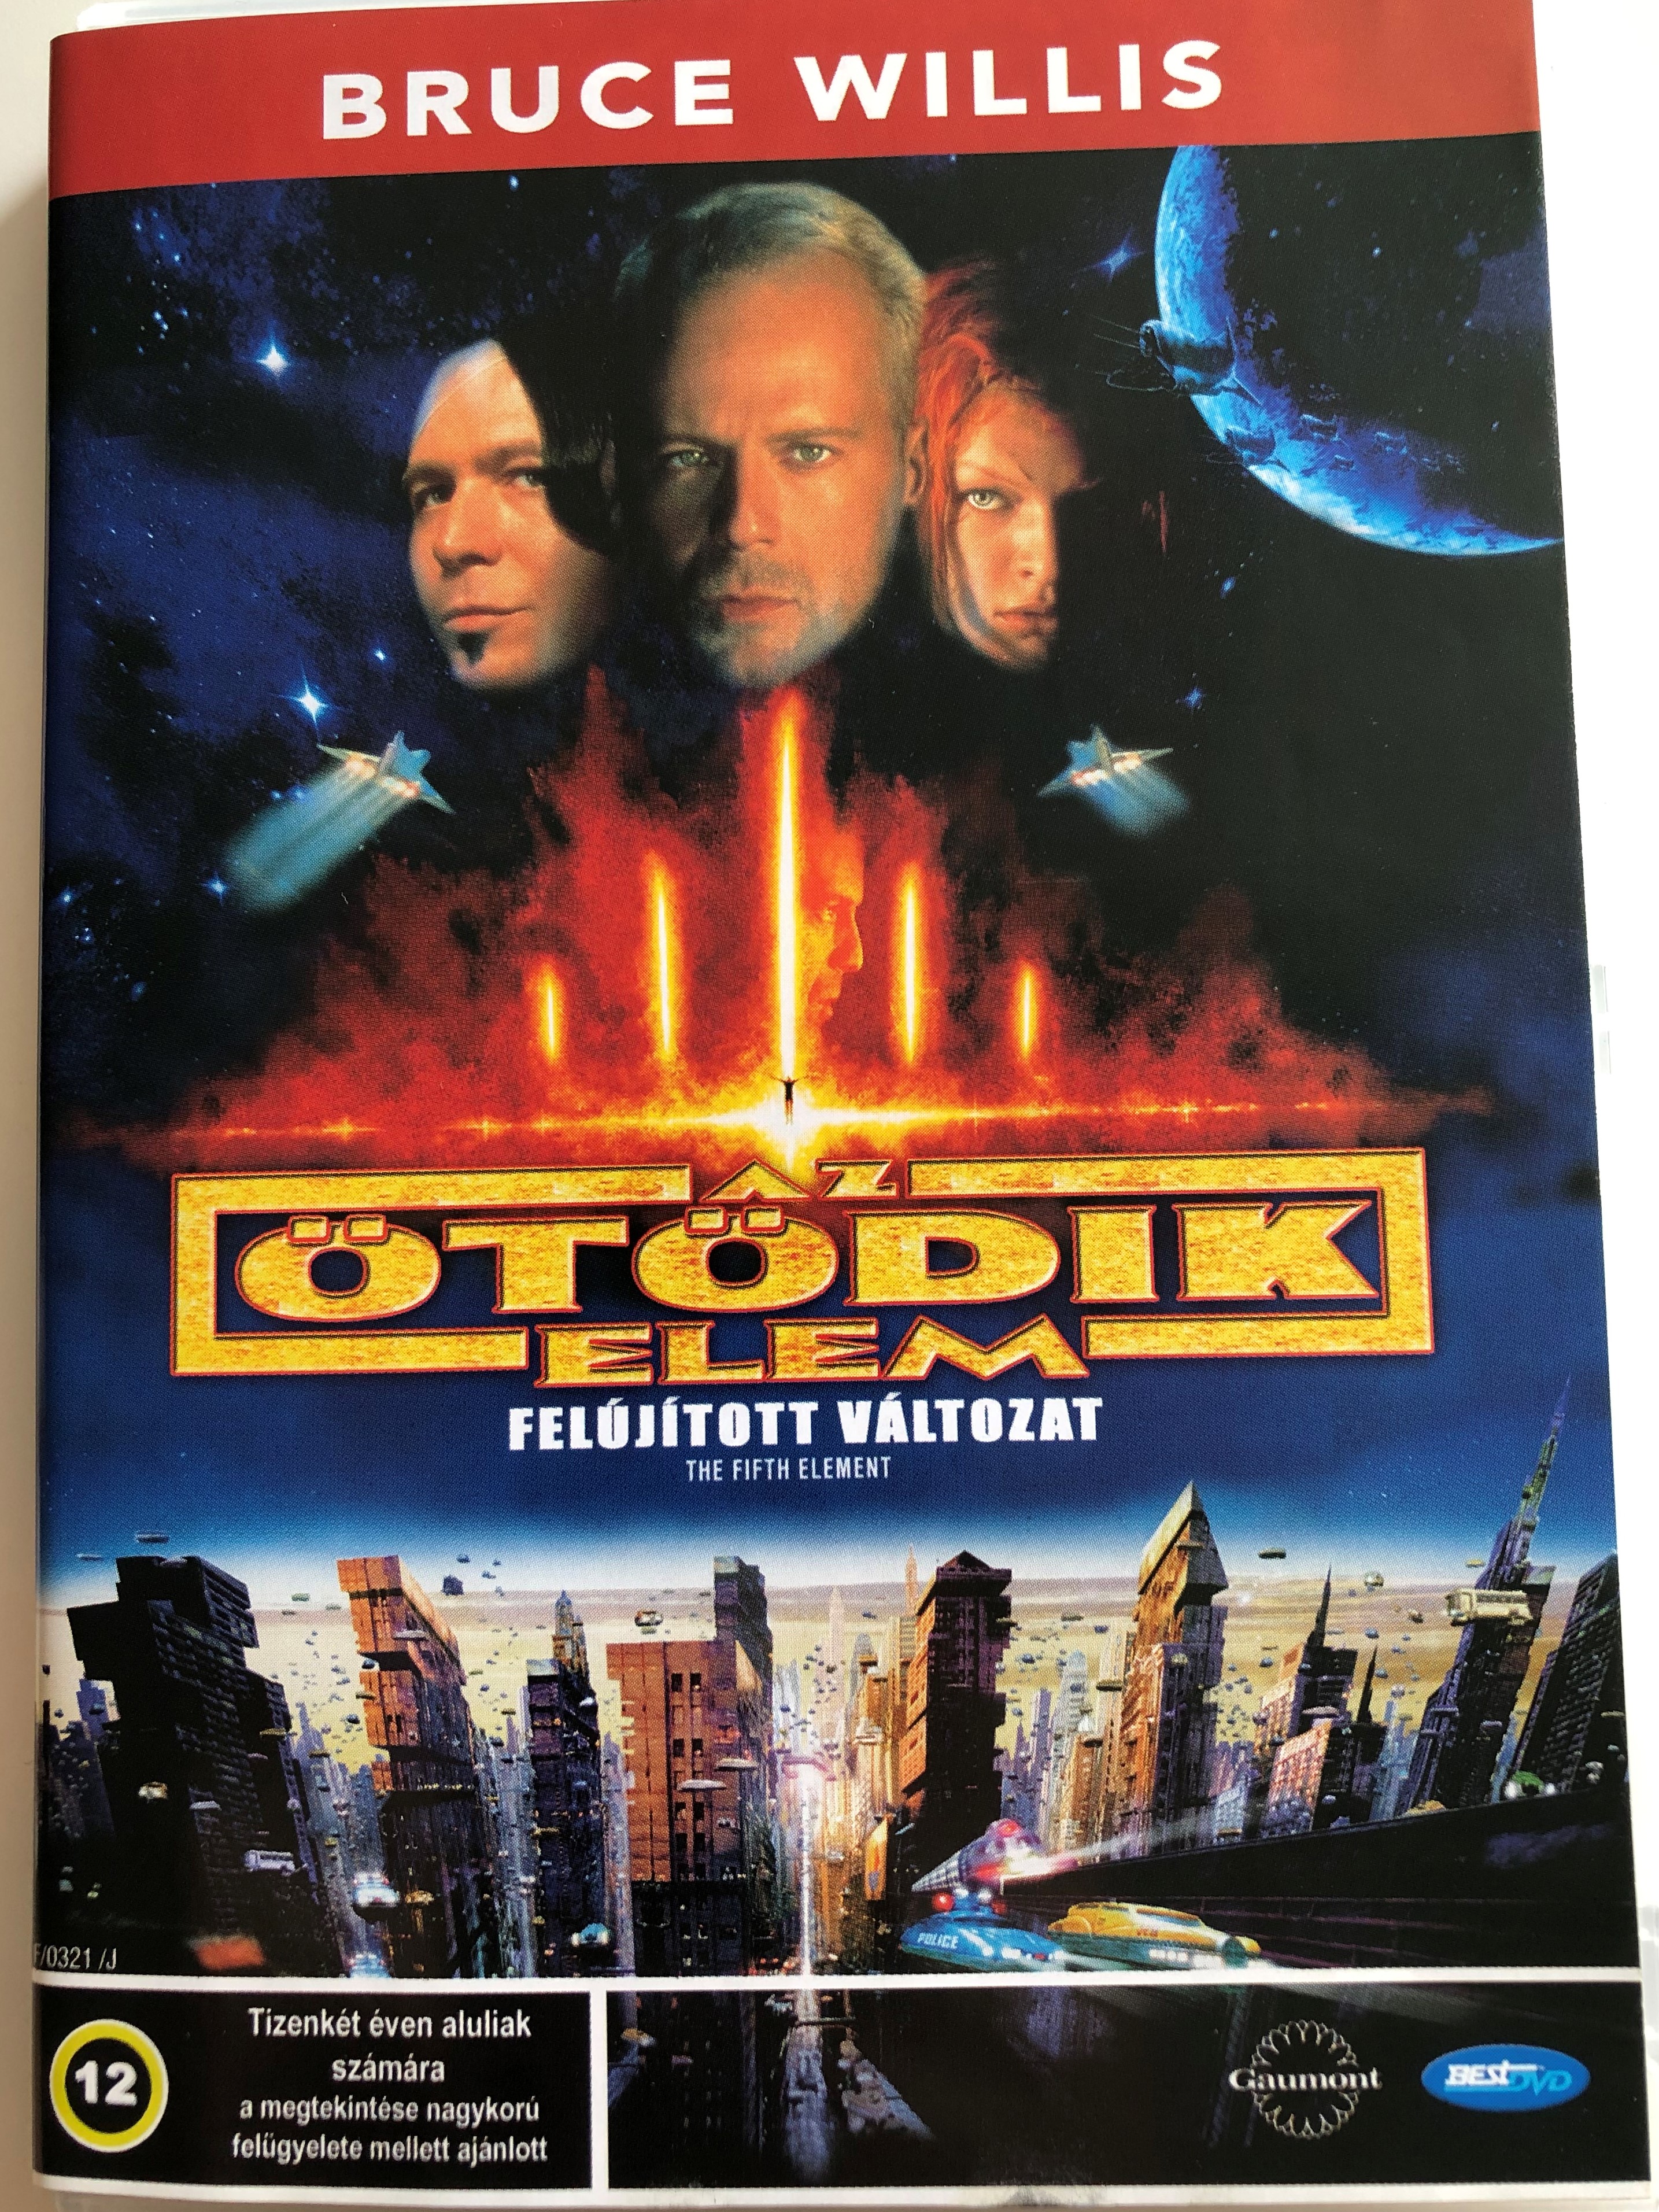 the-fifth-element-dvd-1997-az-t-dik-elem-fel-j-tott-v-ltozat-directed-by-luc-besson-starring-bruce-willis-milla-jovovich-gary-oldman-1-.jpg